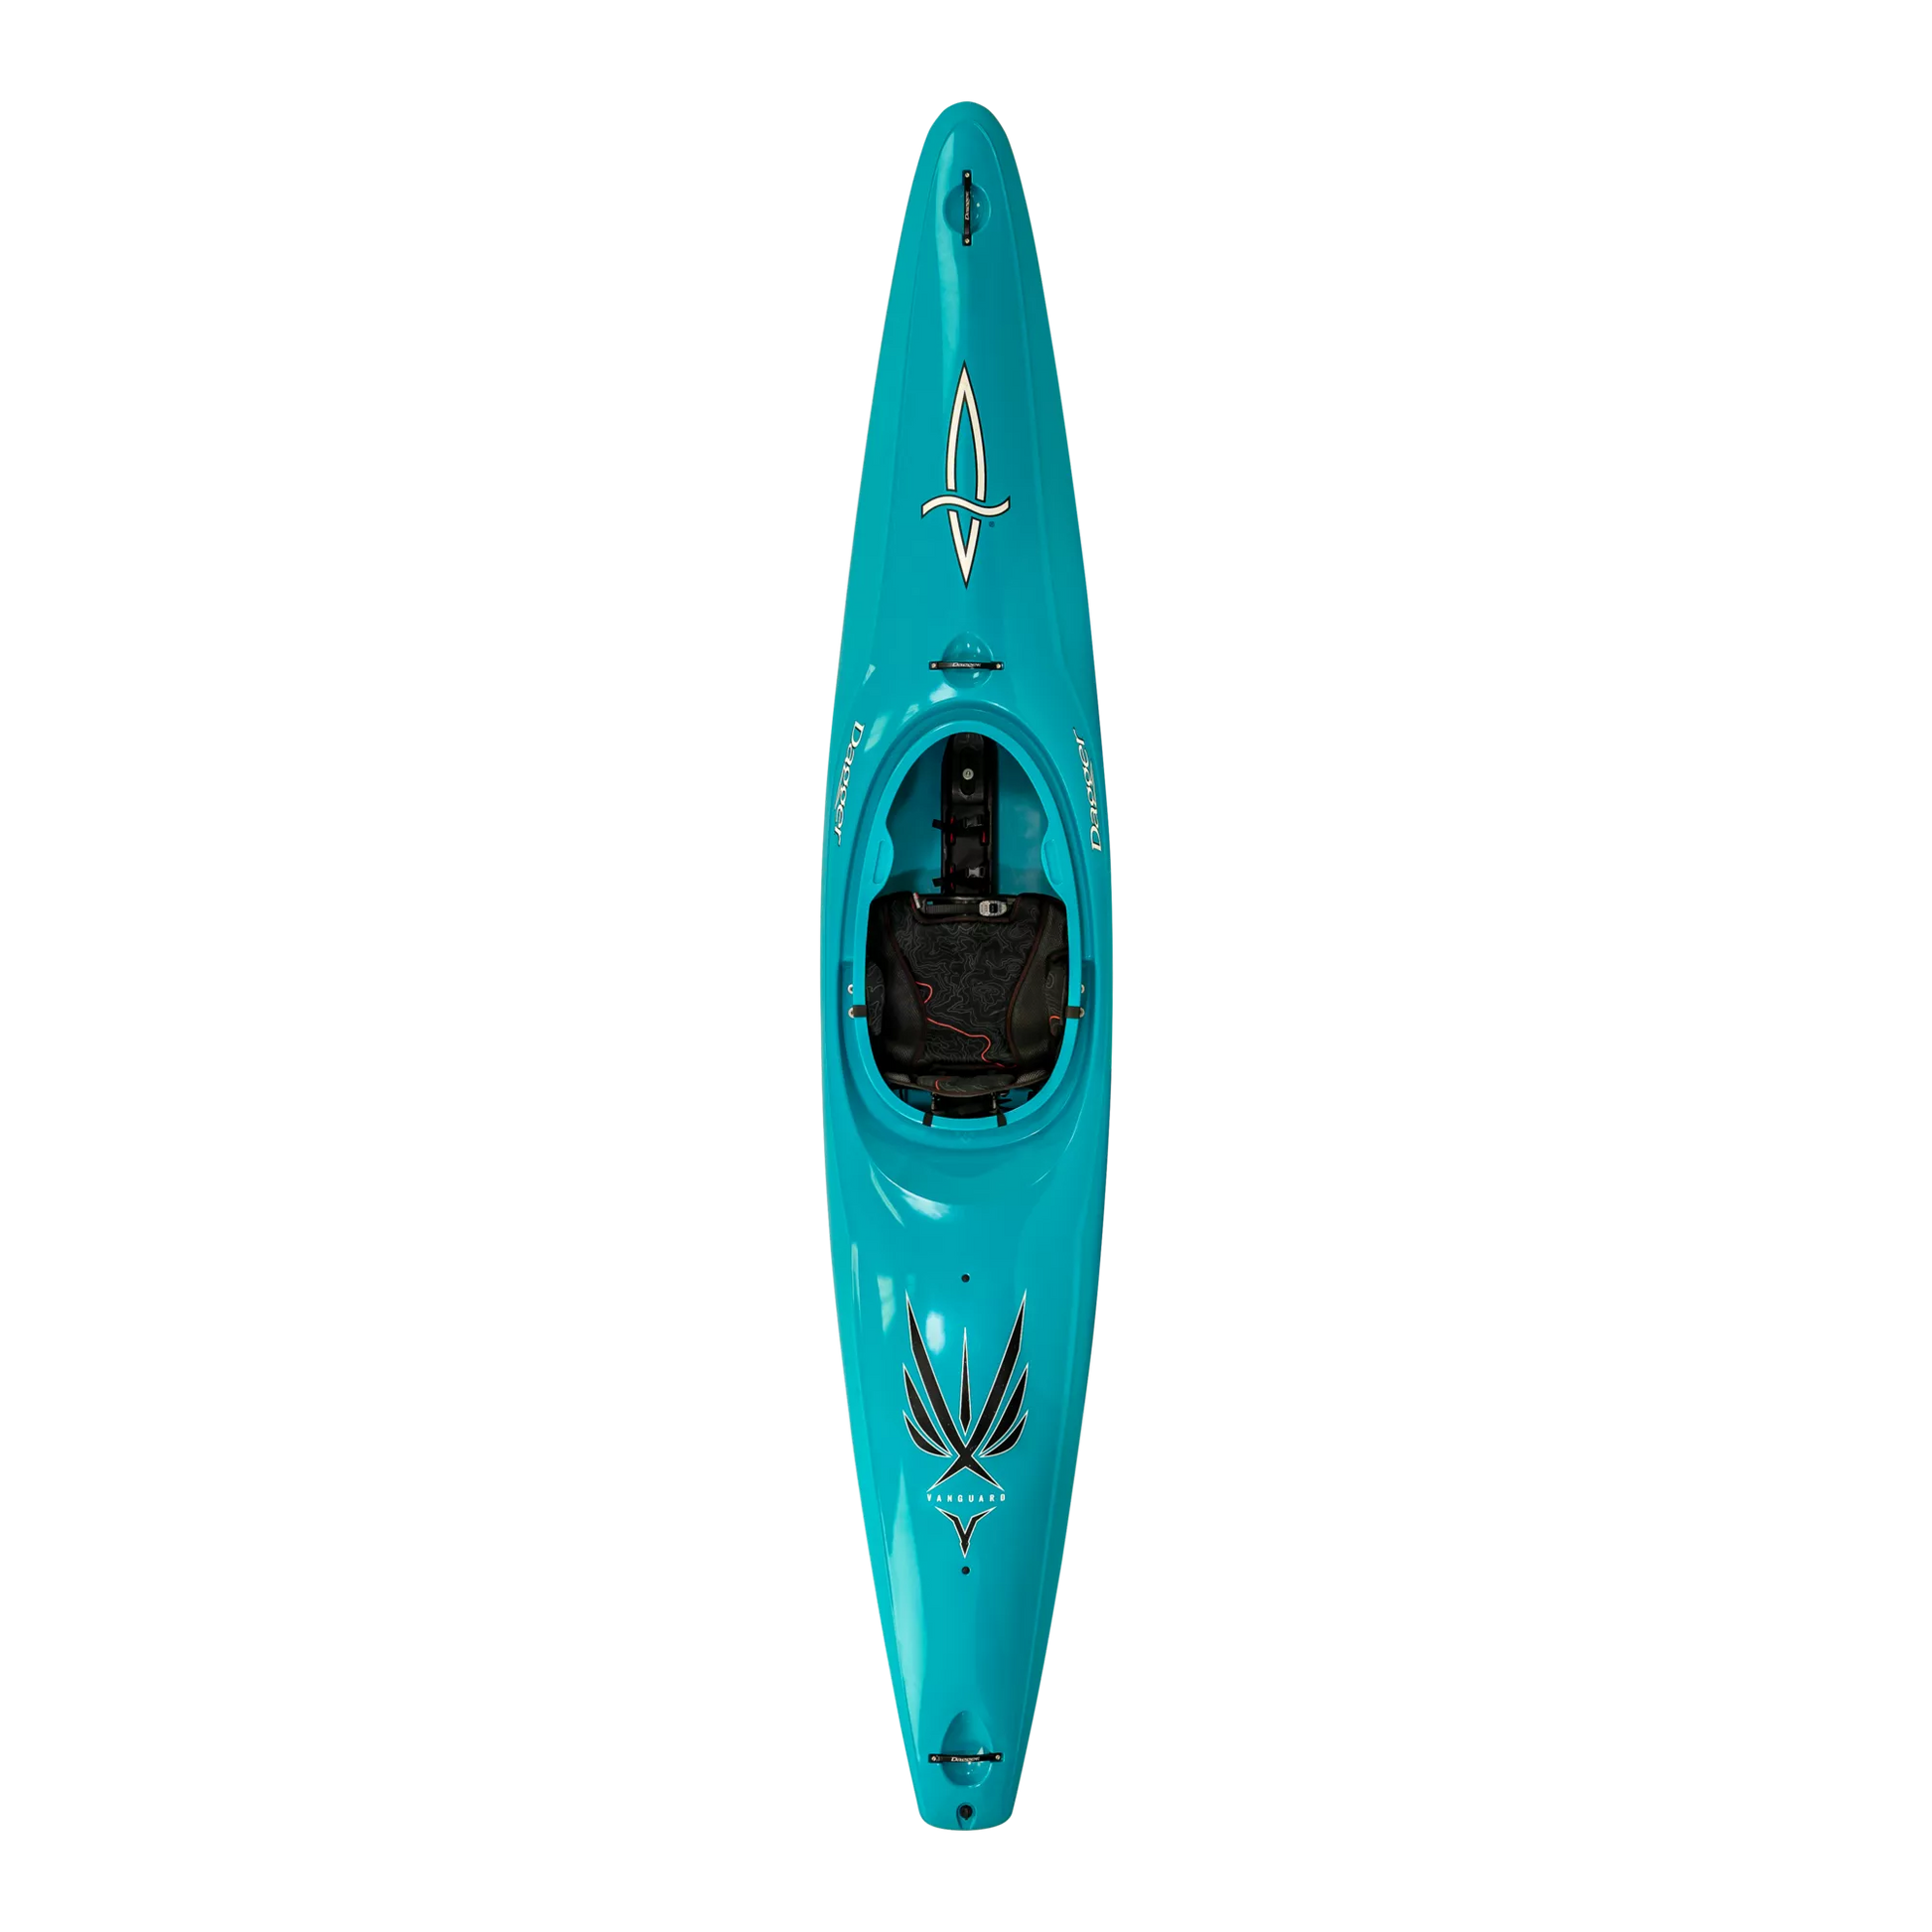 Turquoise Dagger Vanguard 12.0 river running, whitewater racing, long boat kayak.